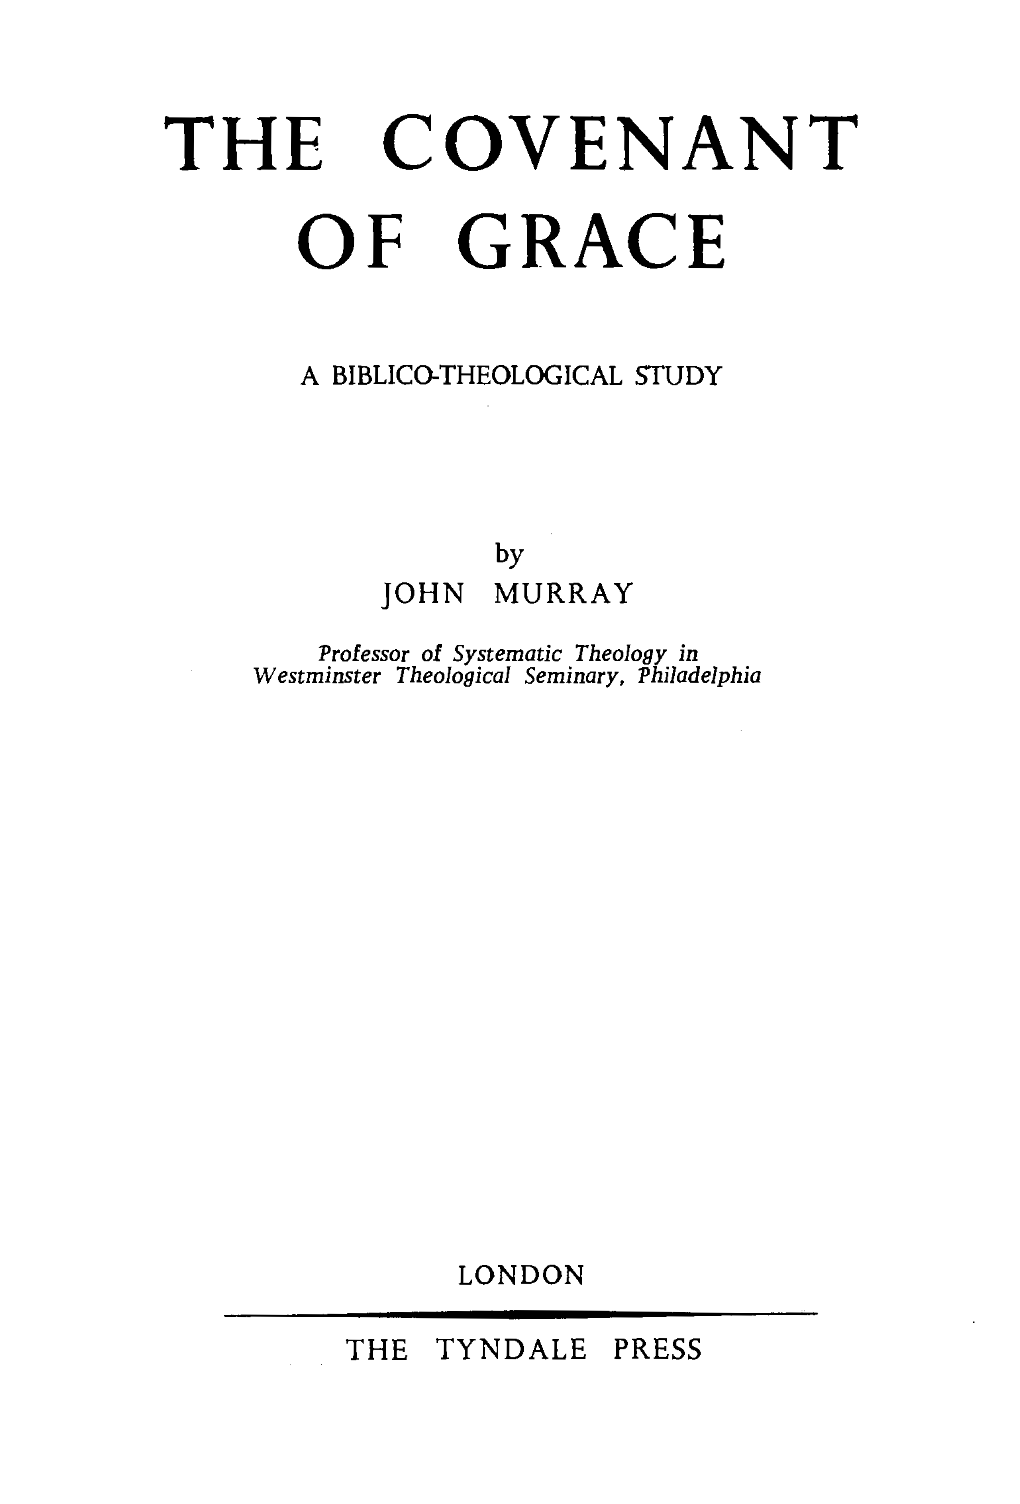 John Murray, the Covenant of Grace. London